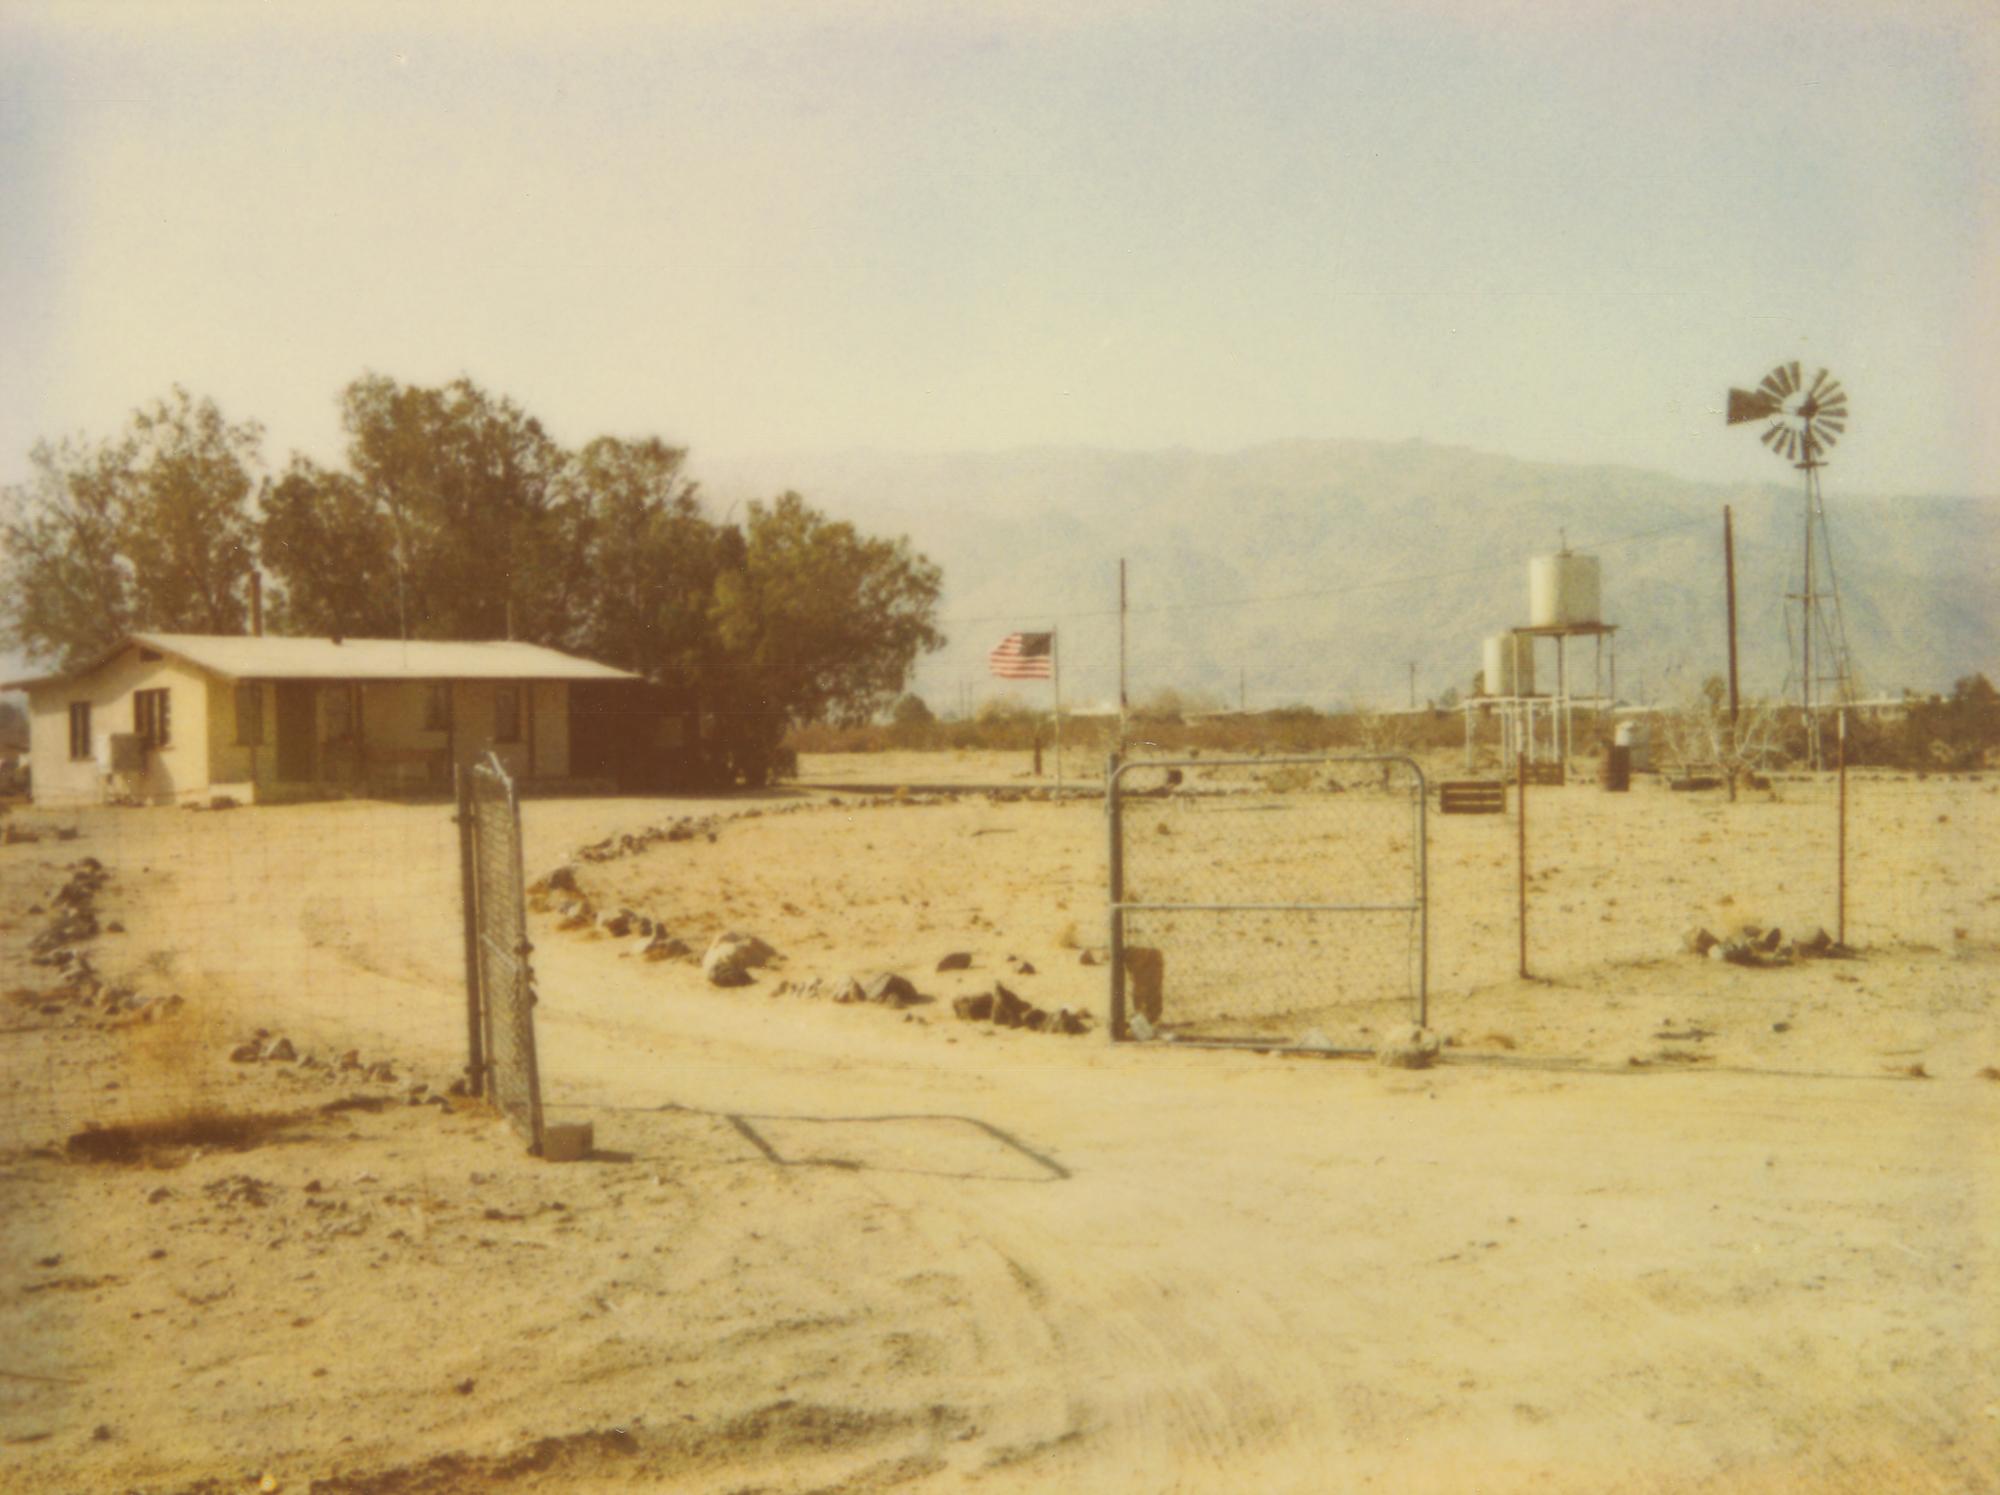 Stefanie Schneider Portrait Photograph - Dust Bowl Farm (American Depression) - analog